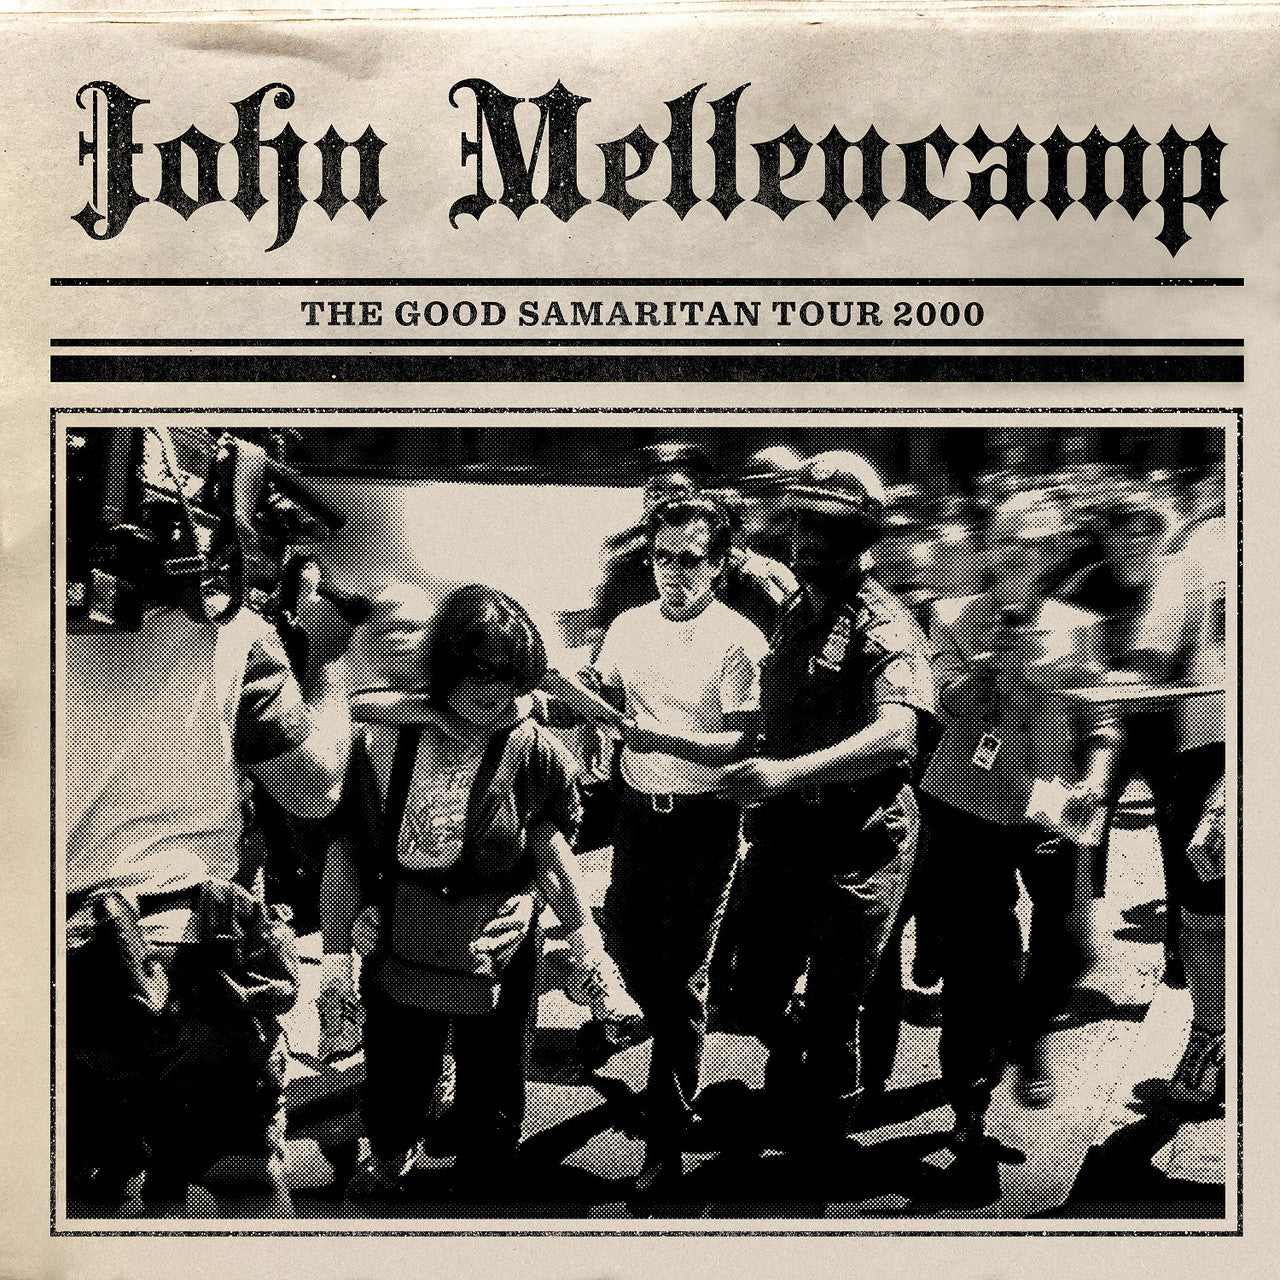 JOHN MELLENCAMP - THE GOOD SAMARITAN TOUR 2000 - VINYL LP